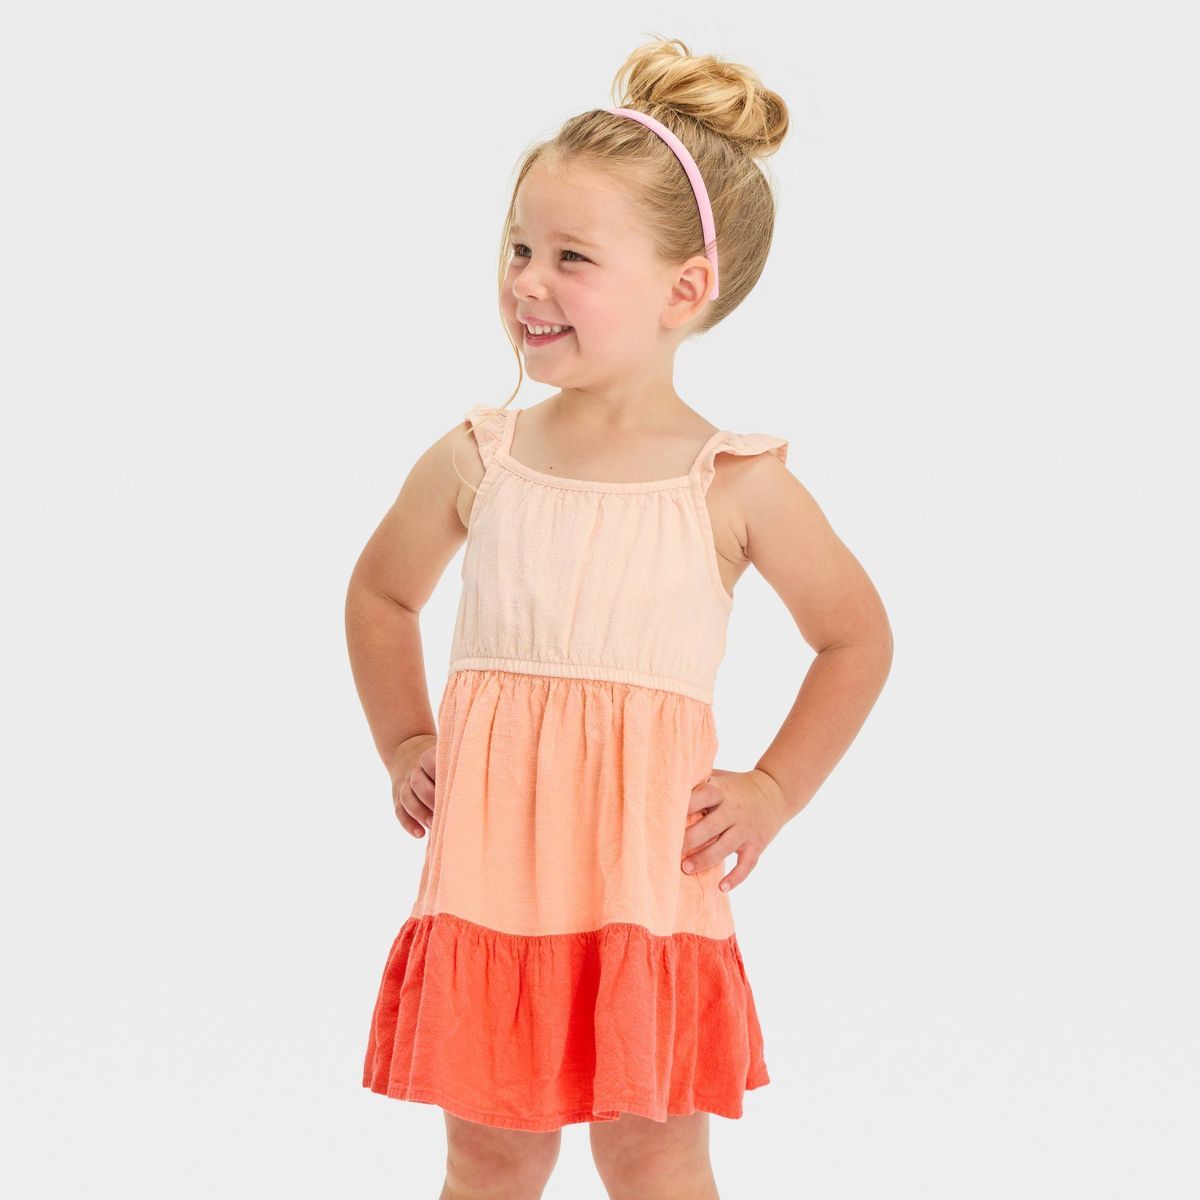 Toddler Girls' Ombre Dress - Cat & Jack™ Peach Orange 5T | Target